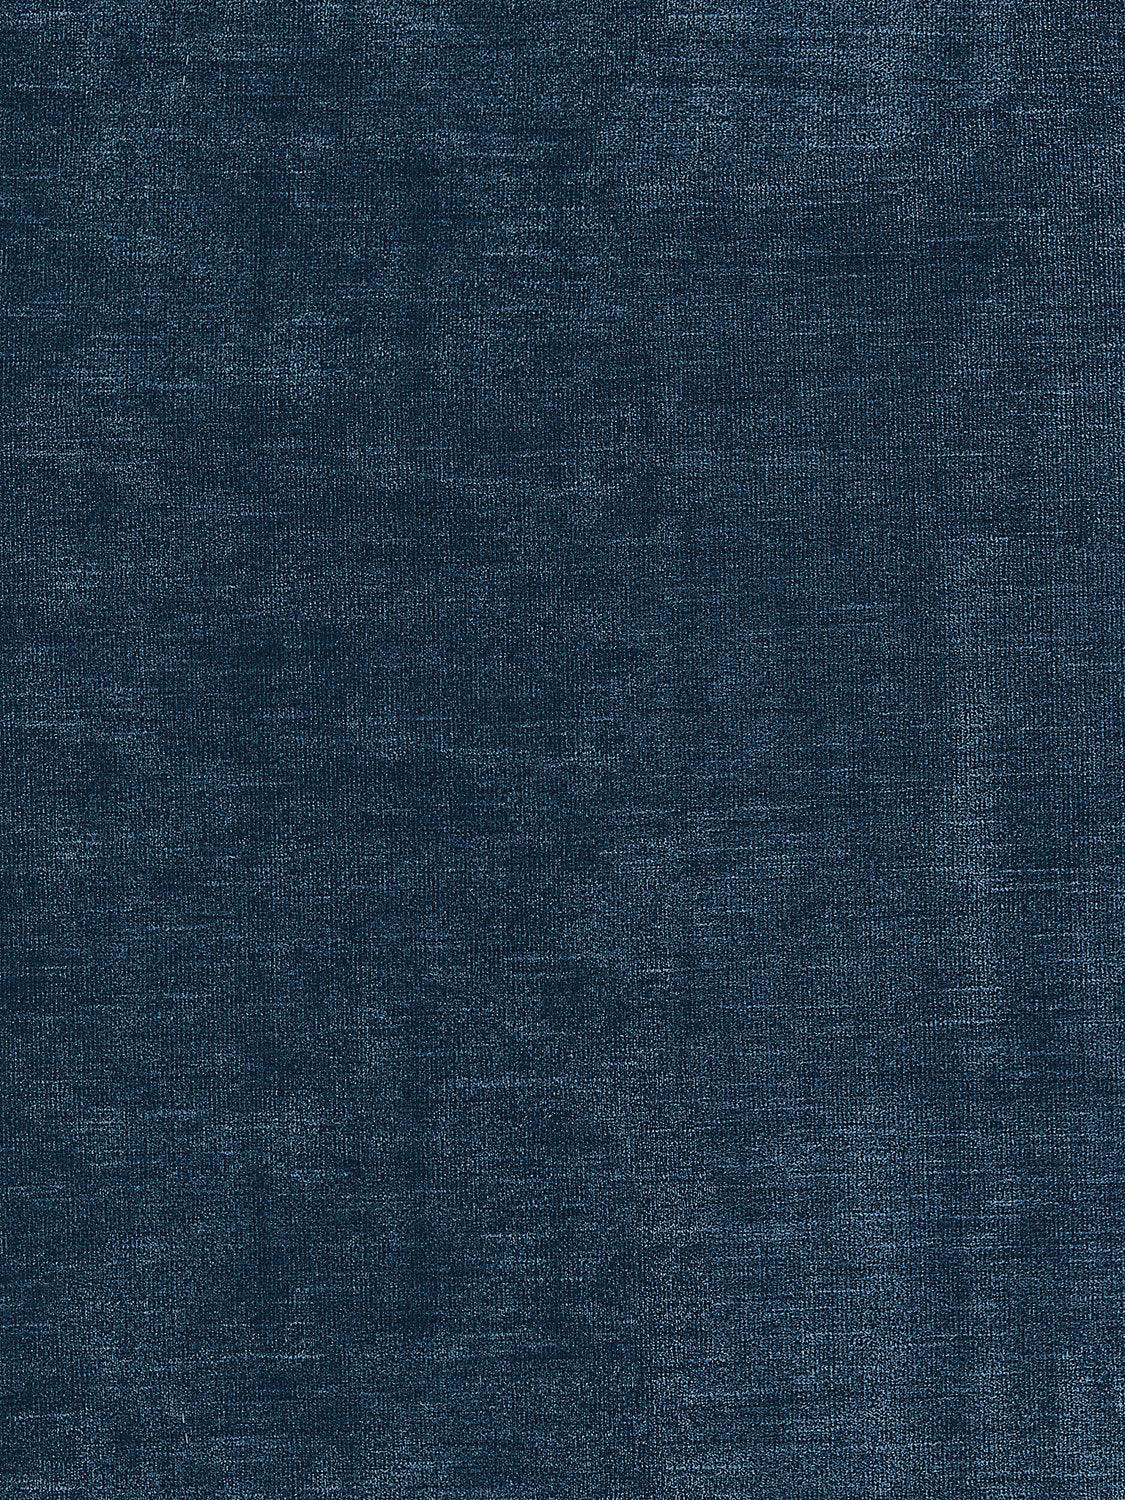 SUPREME VELVET INSIGNIA BLUE - Atlanta Fabrics